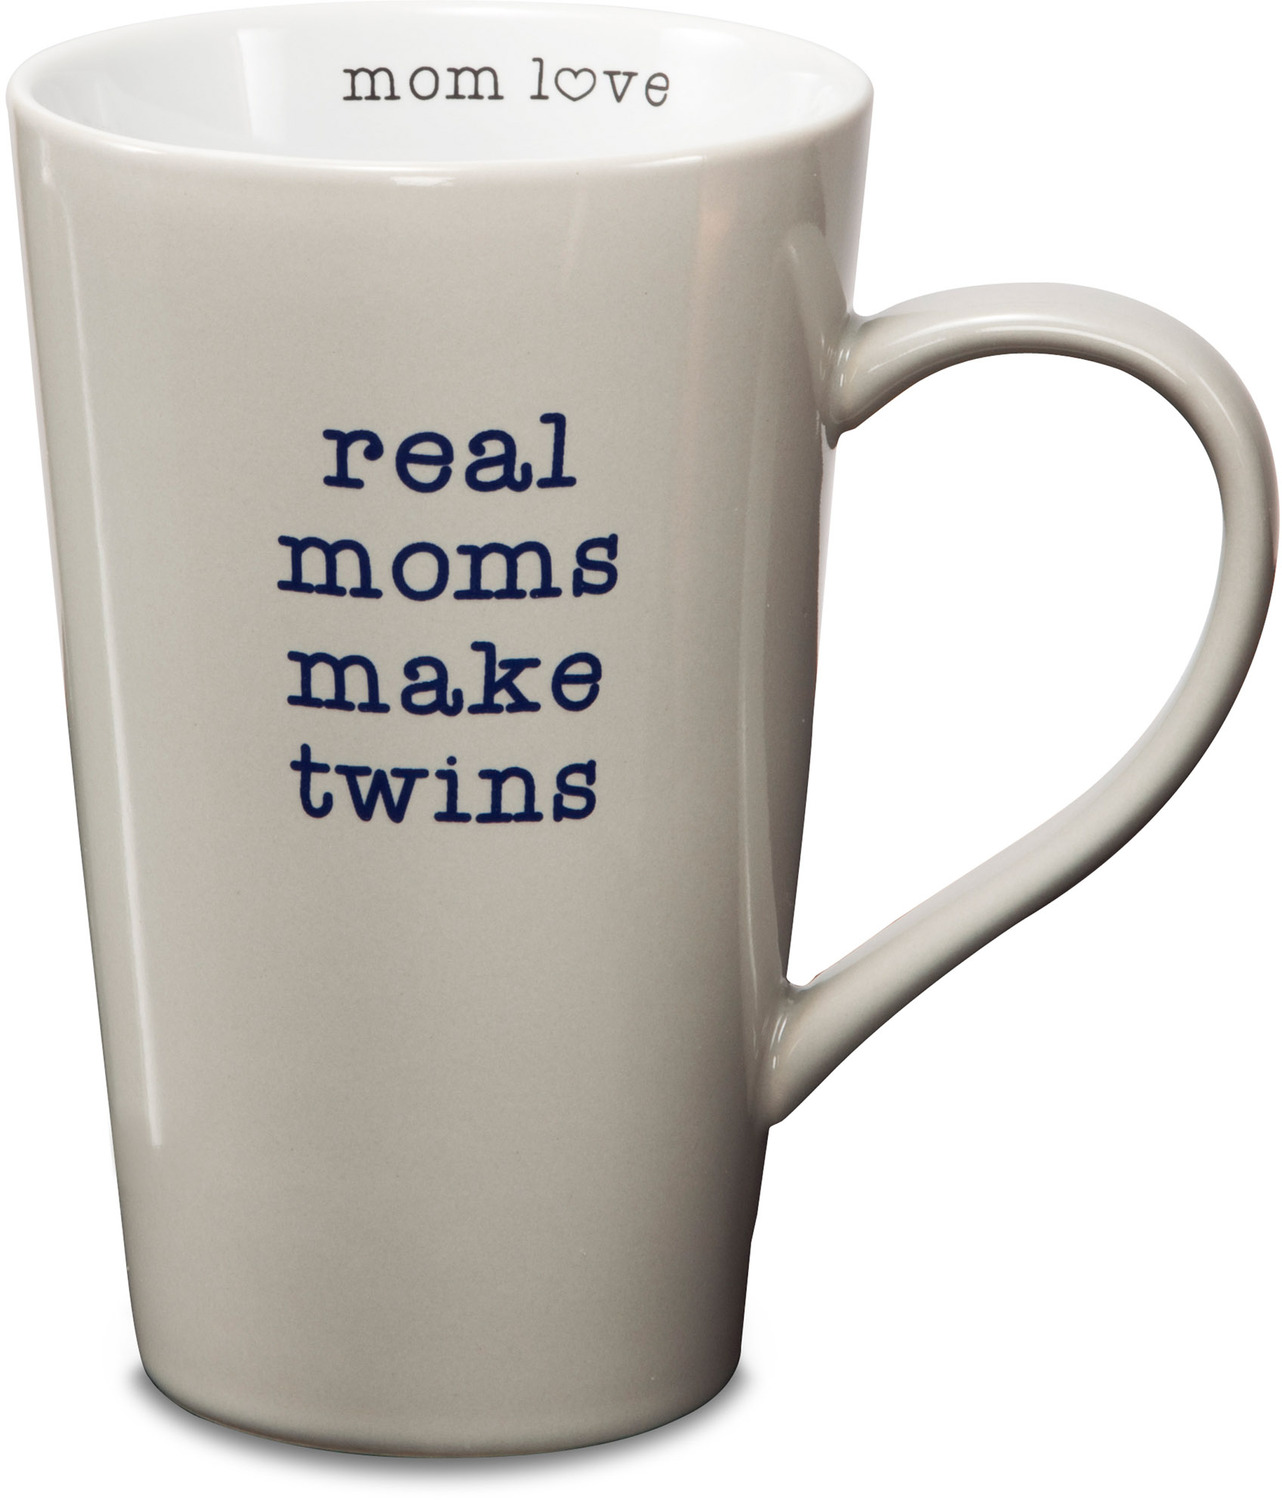 Twin Mom by Mom Love - Twin Mom - 5.5" -  18 oz Latte Mug